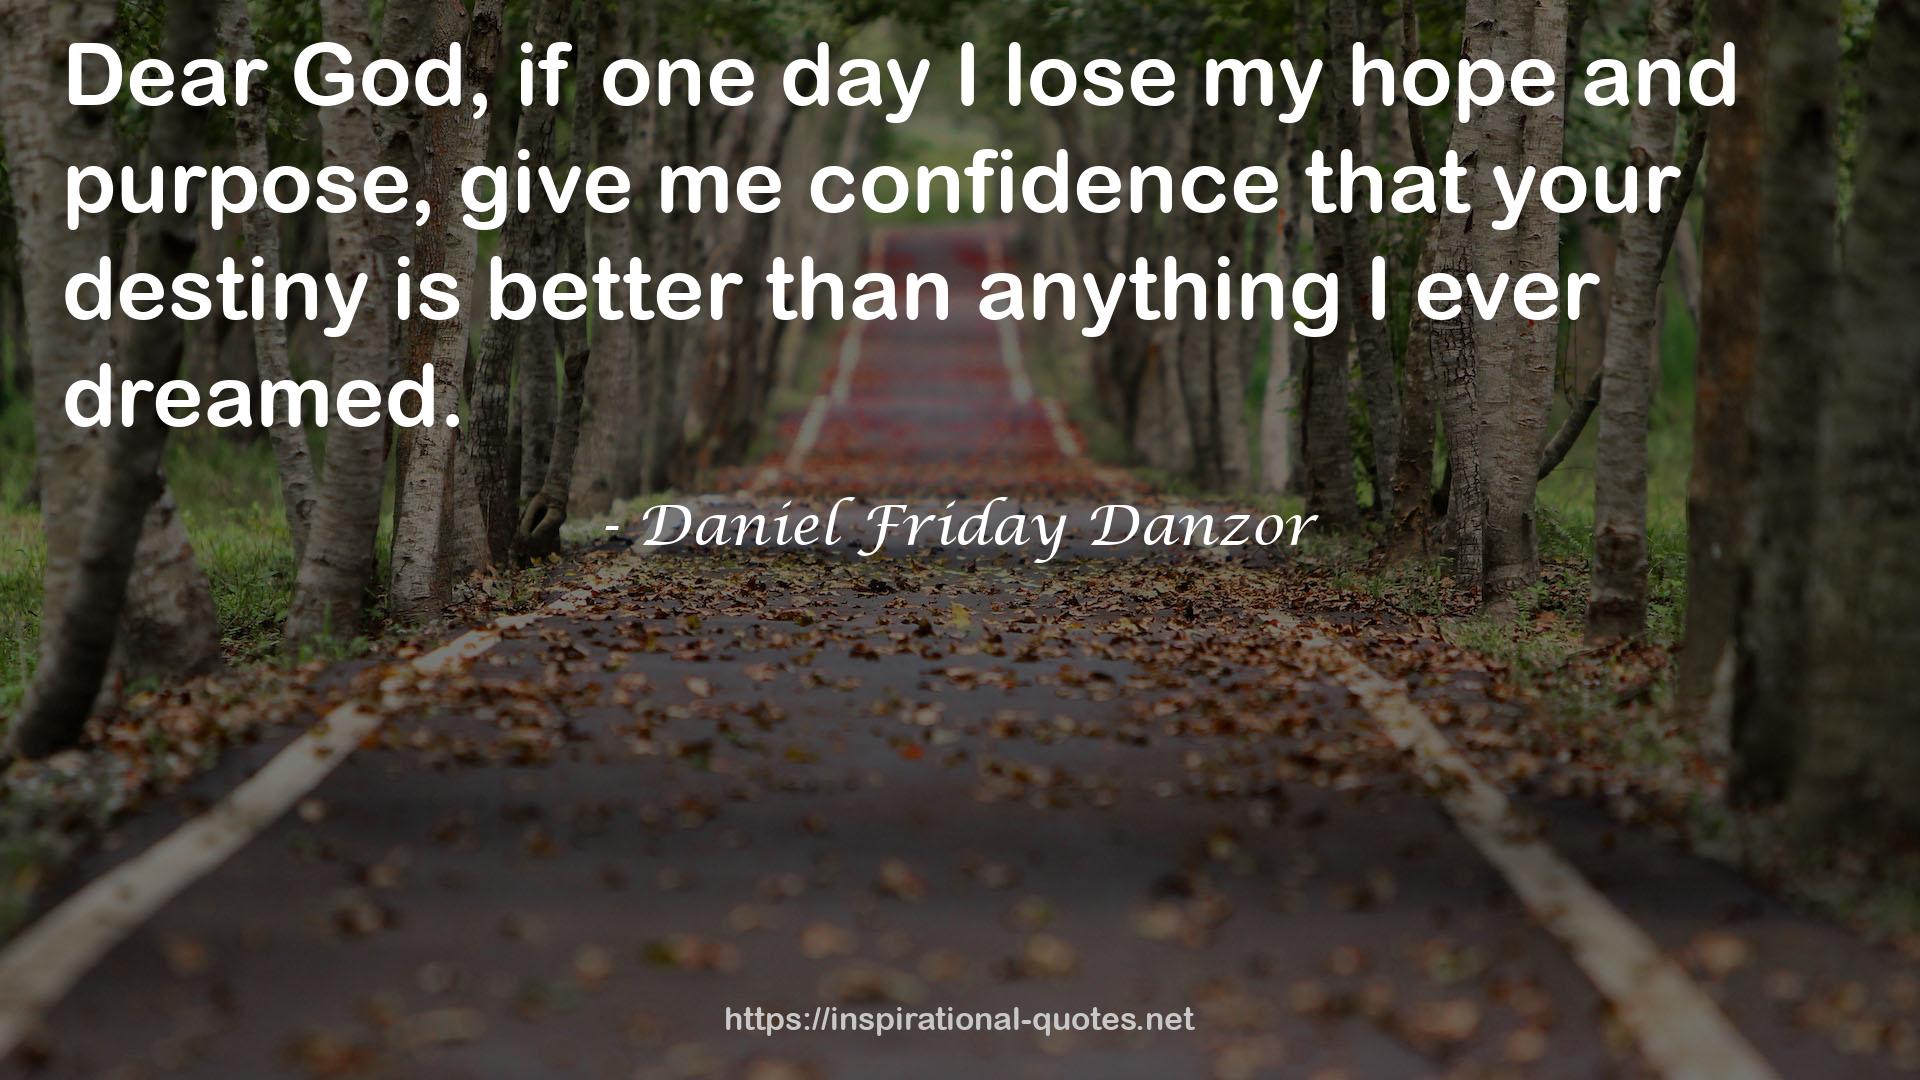 Daniel Friday Danzor QUOTES